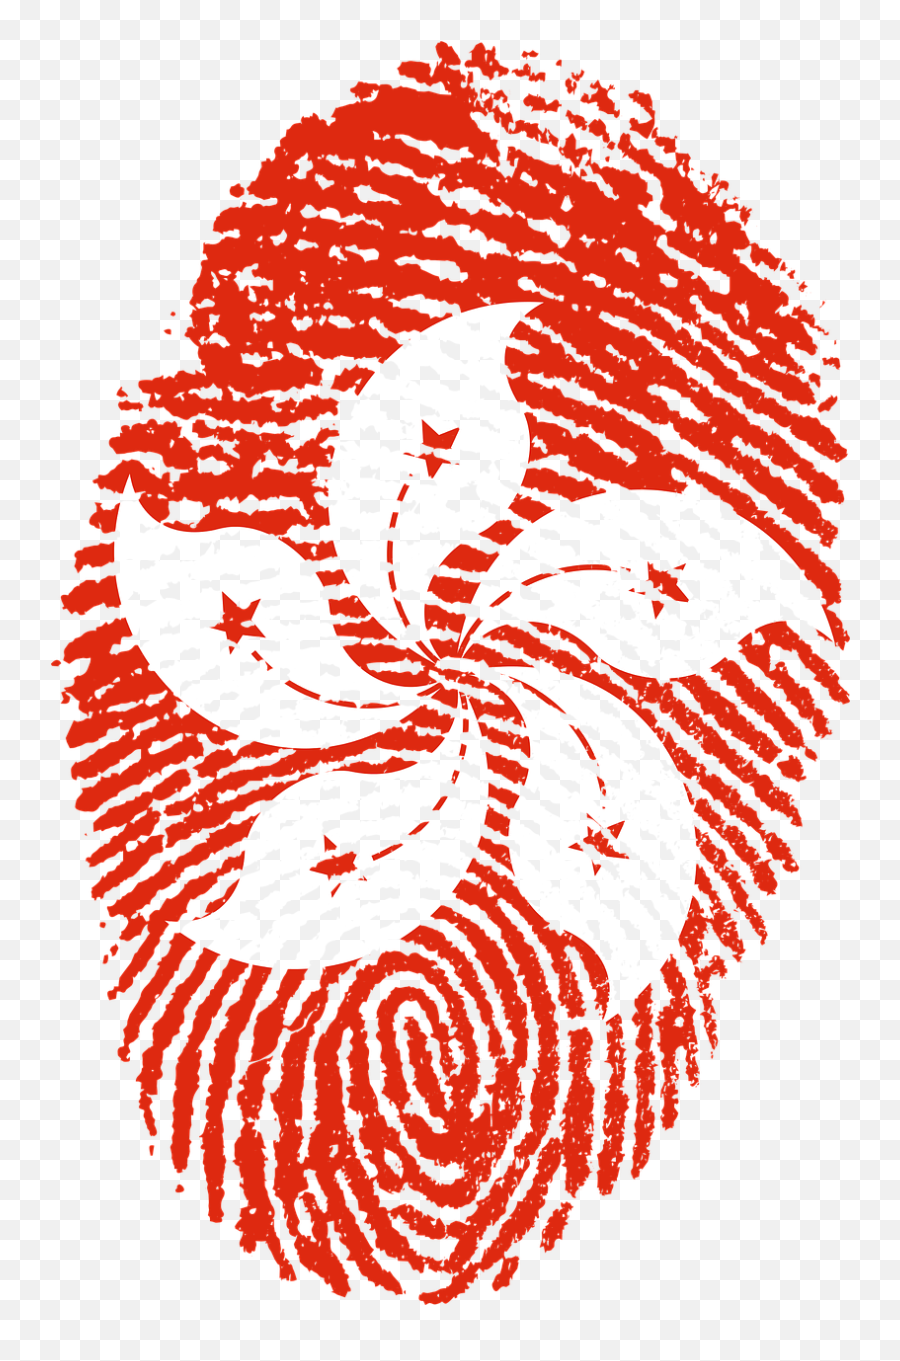 Hong Kong Flag Fingerprint - El Salvador Fingerprint Emoji,British Hong Kong Flag Emoticon